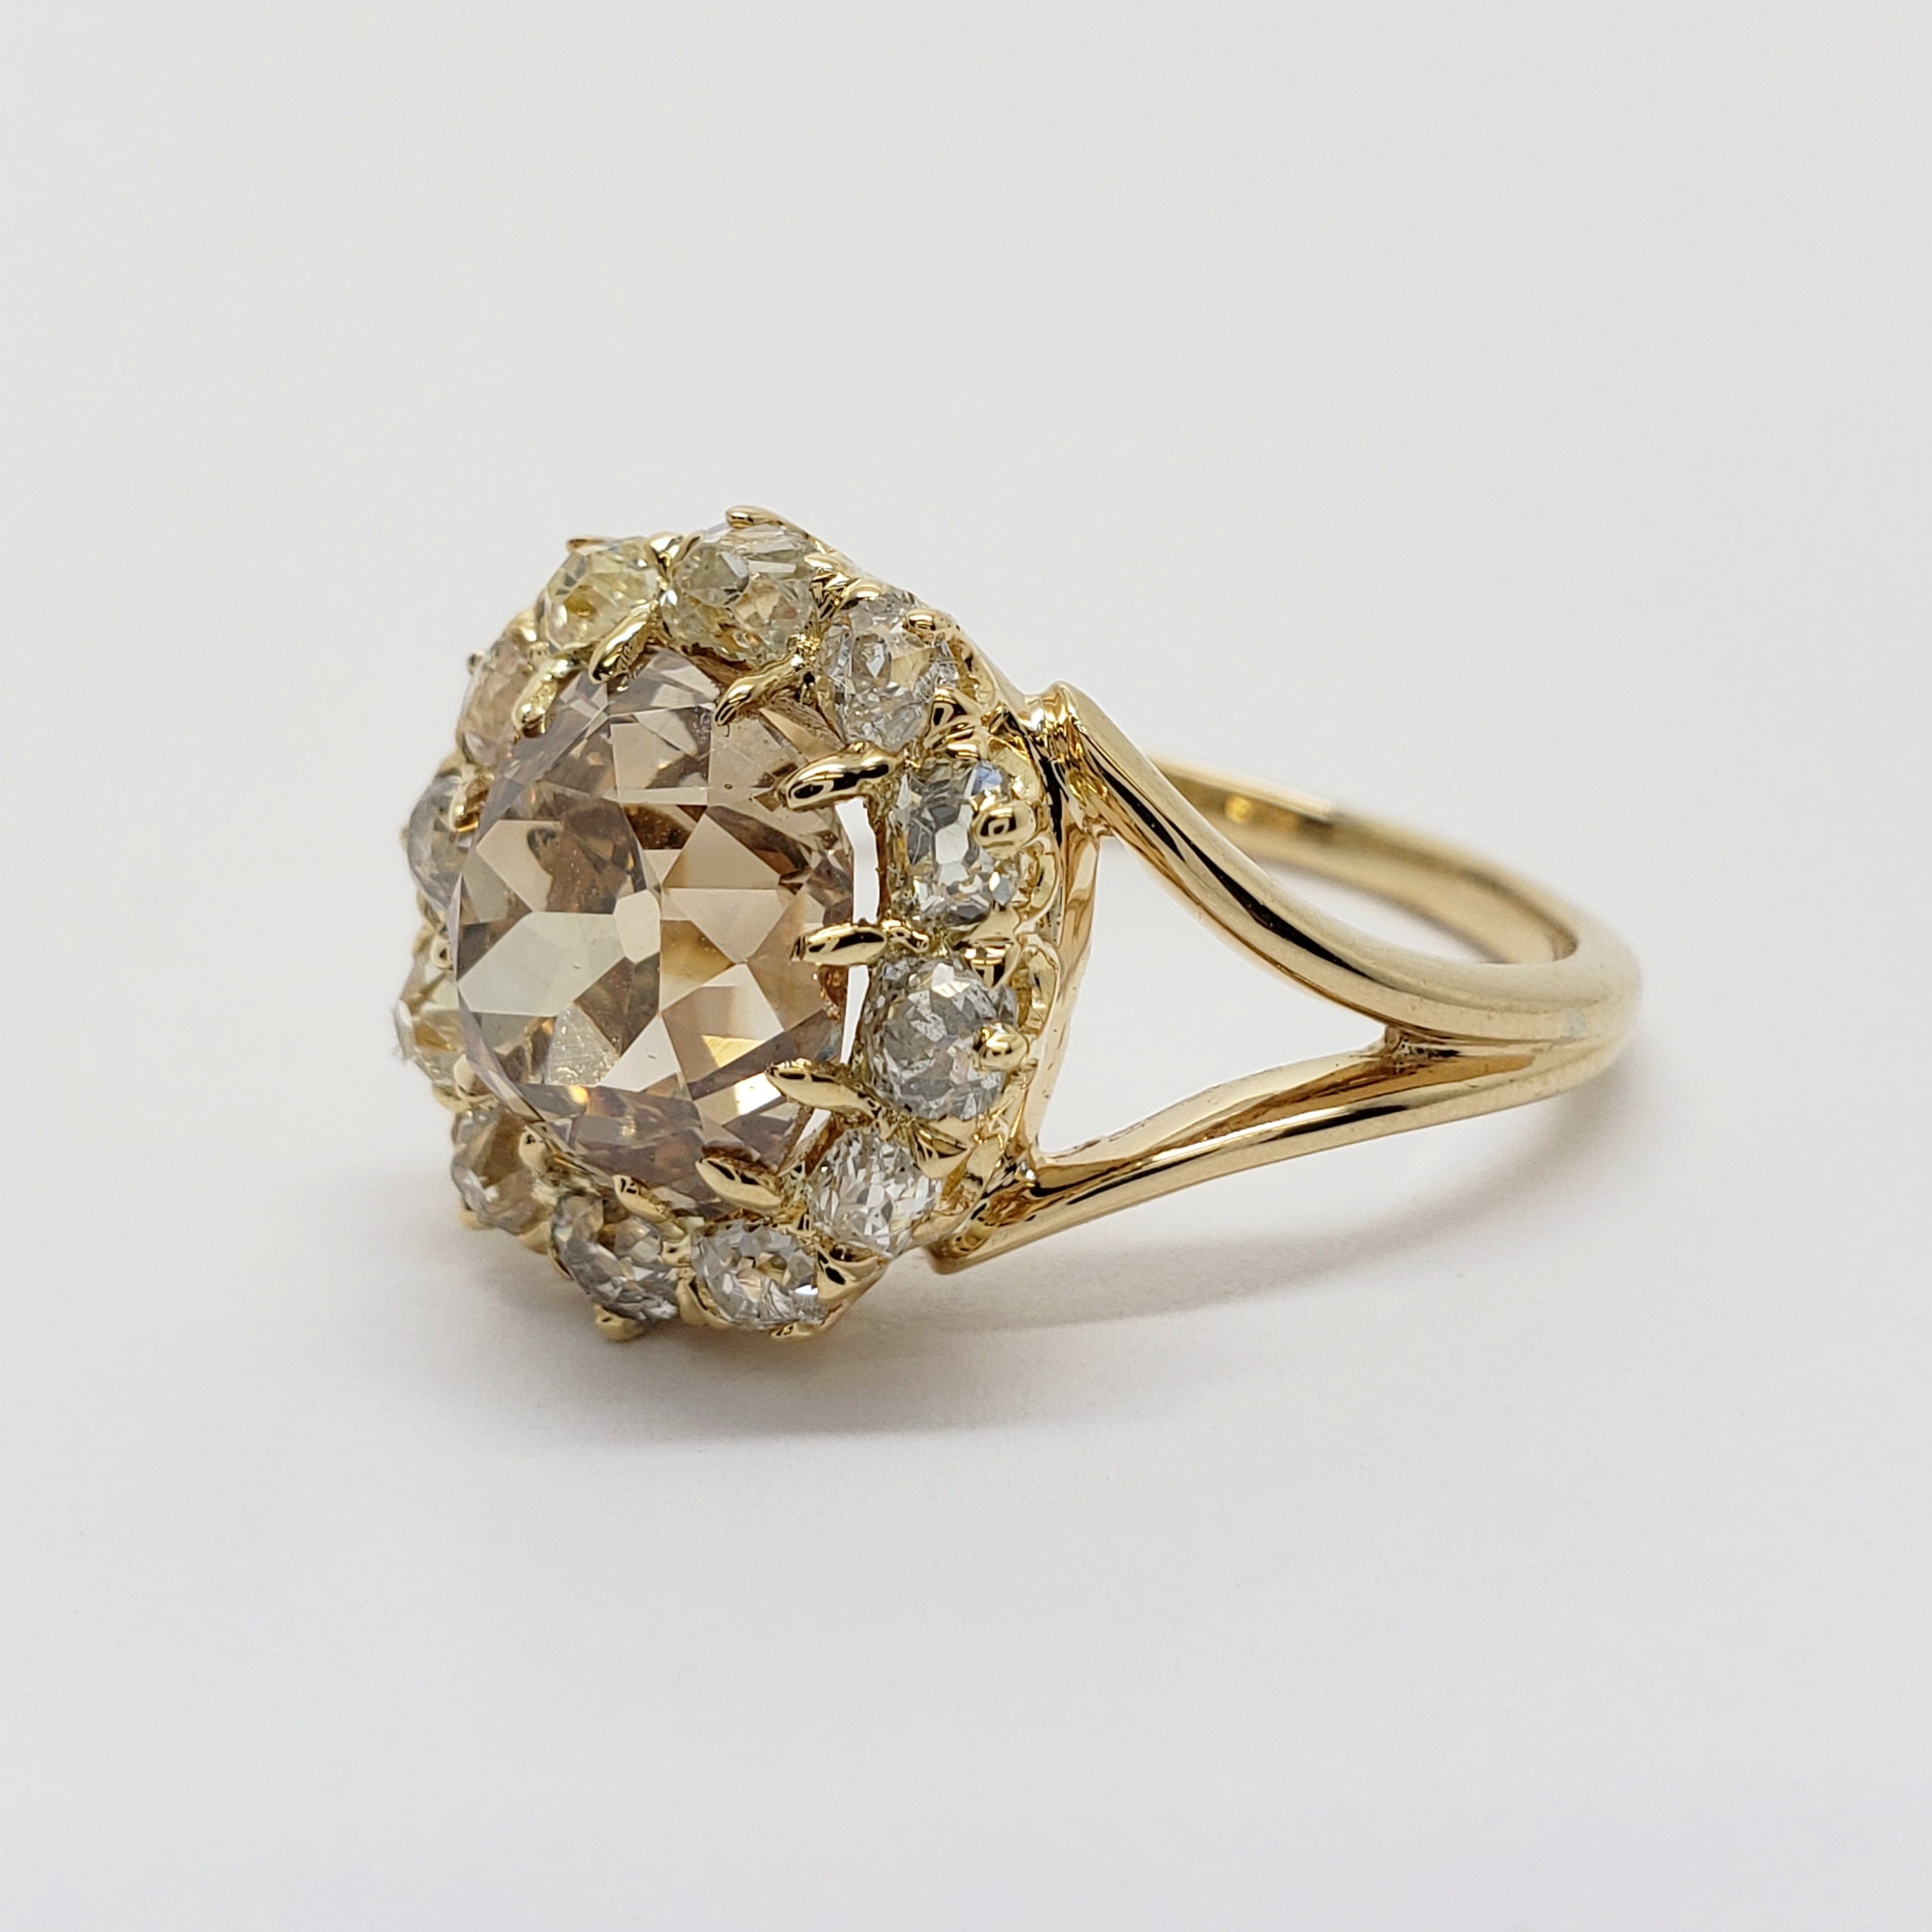 Antique Old Mine Cut Diamond Ring | Era Design Vancouver Canada